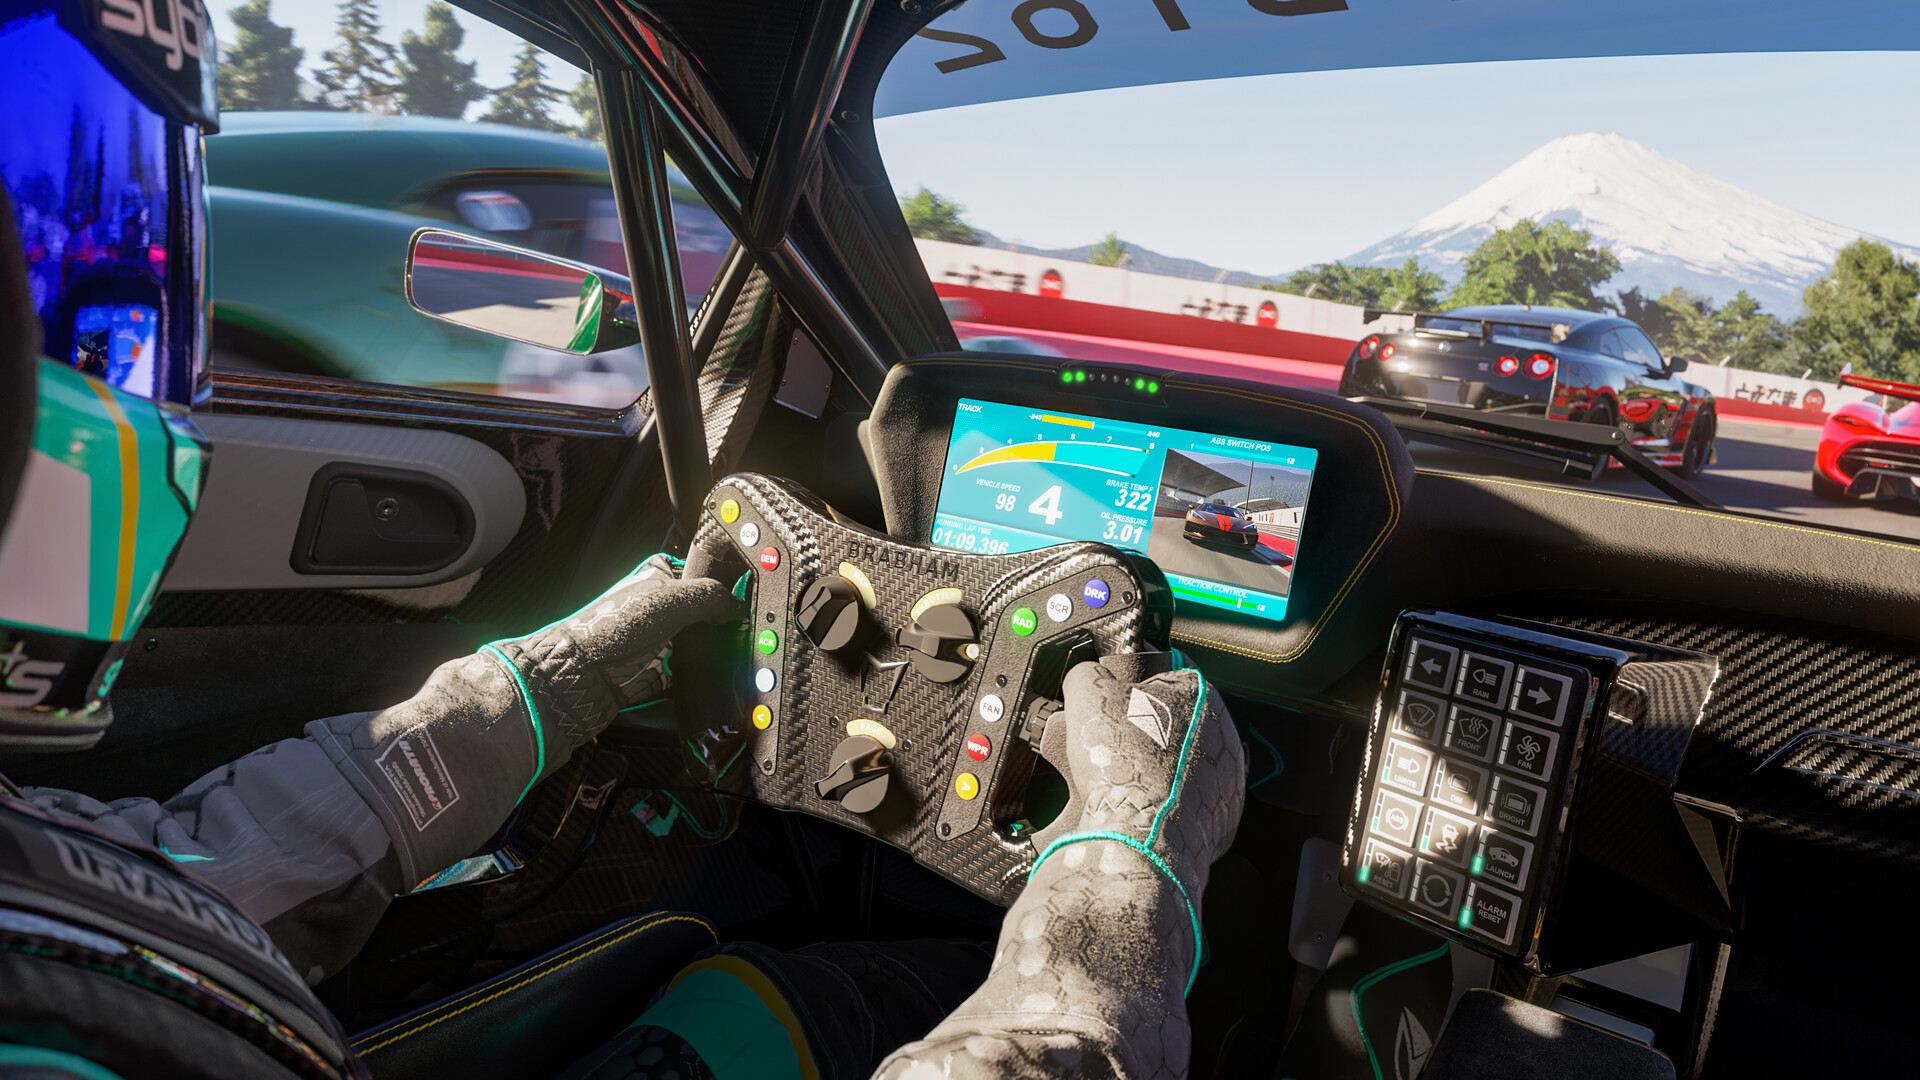 GT Sport (PS5) Vs Forza Horizon 5 (Xbox Series X): Microsoft